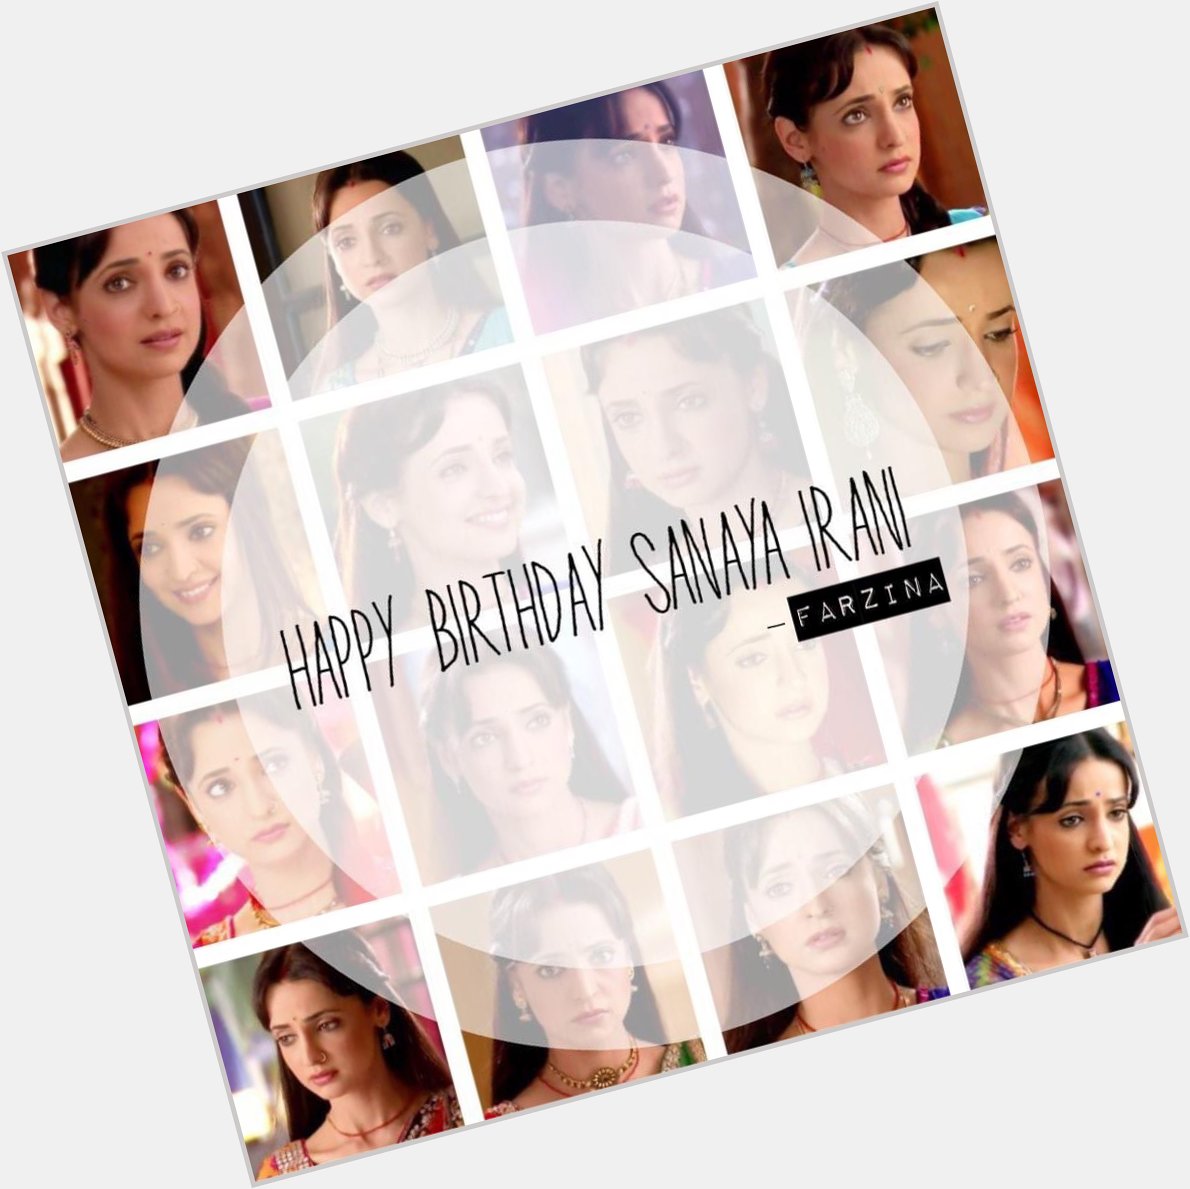 Happy Birthday Sanaya Irani      